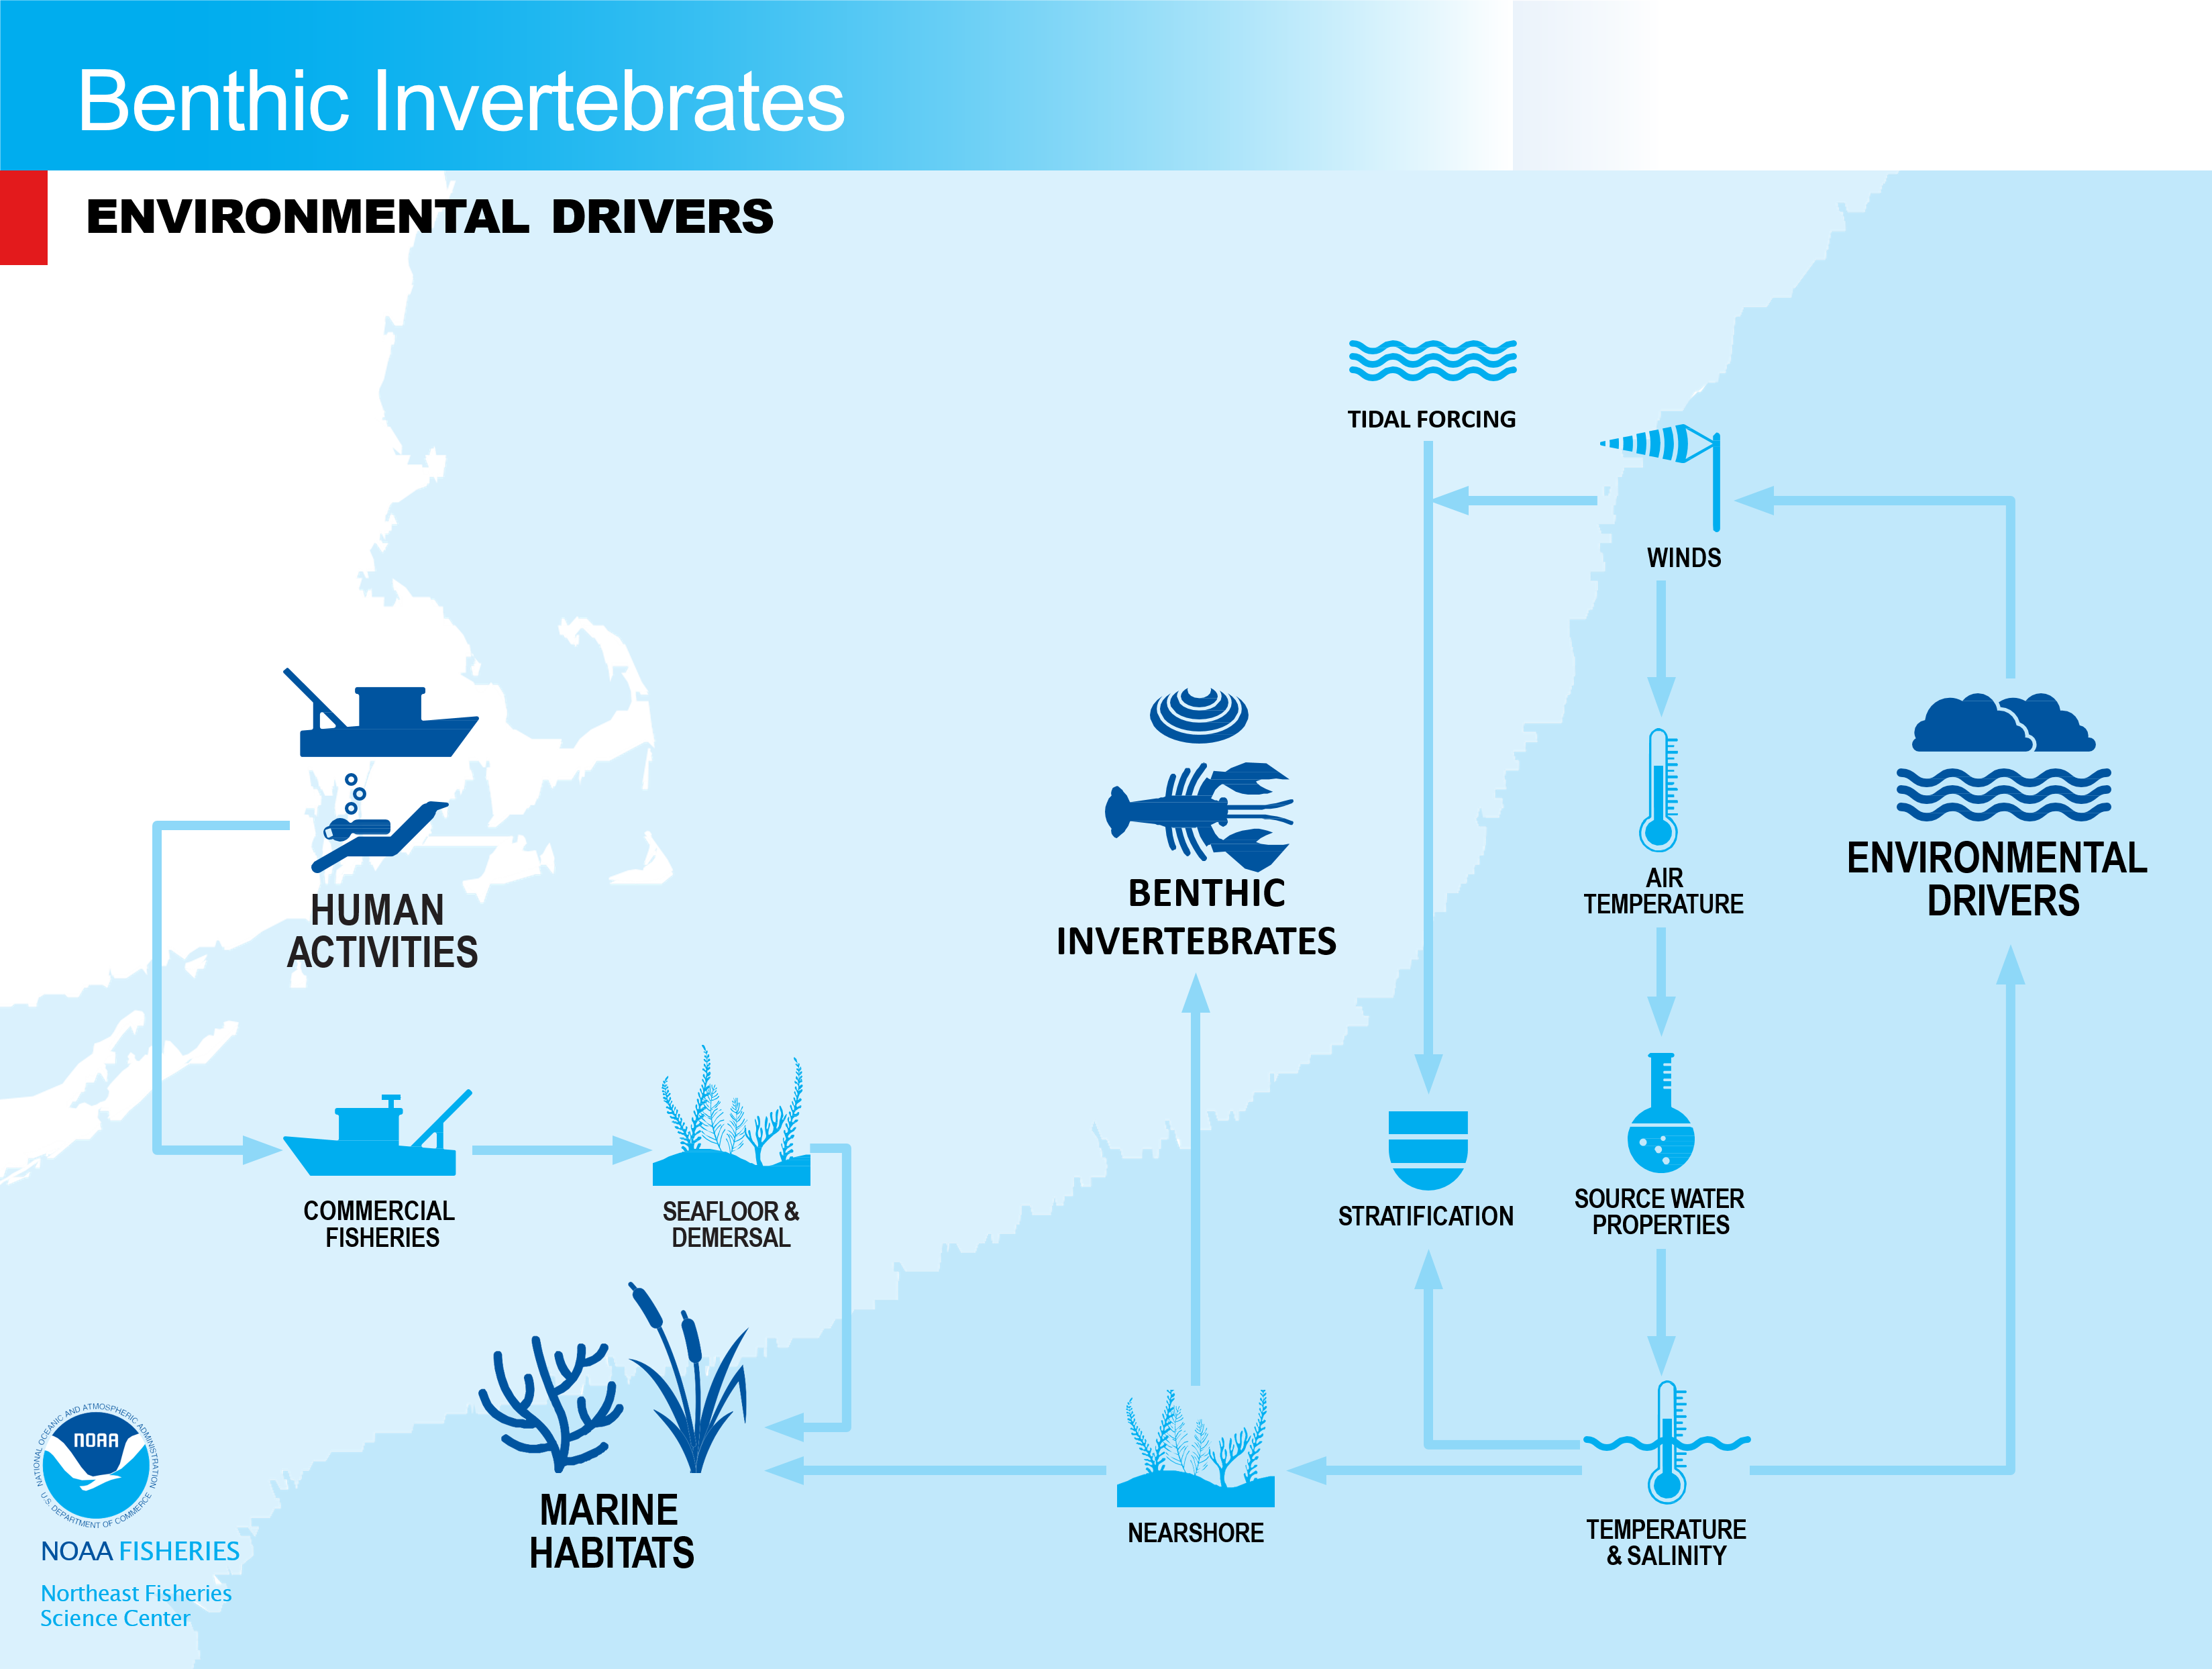 Conceptual model of fished invertebrates environmental drivers in the NE-LME.